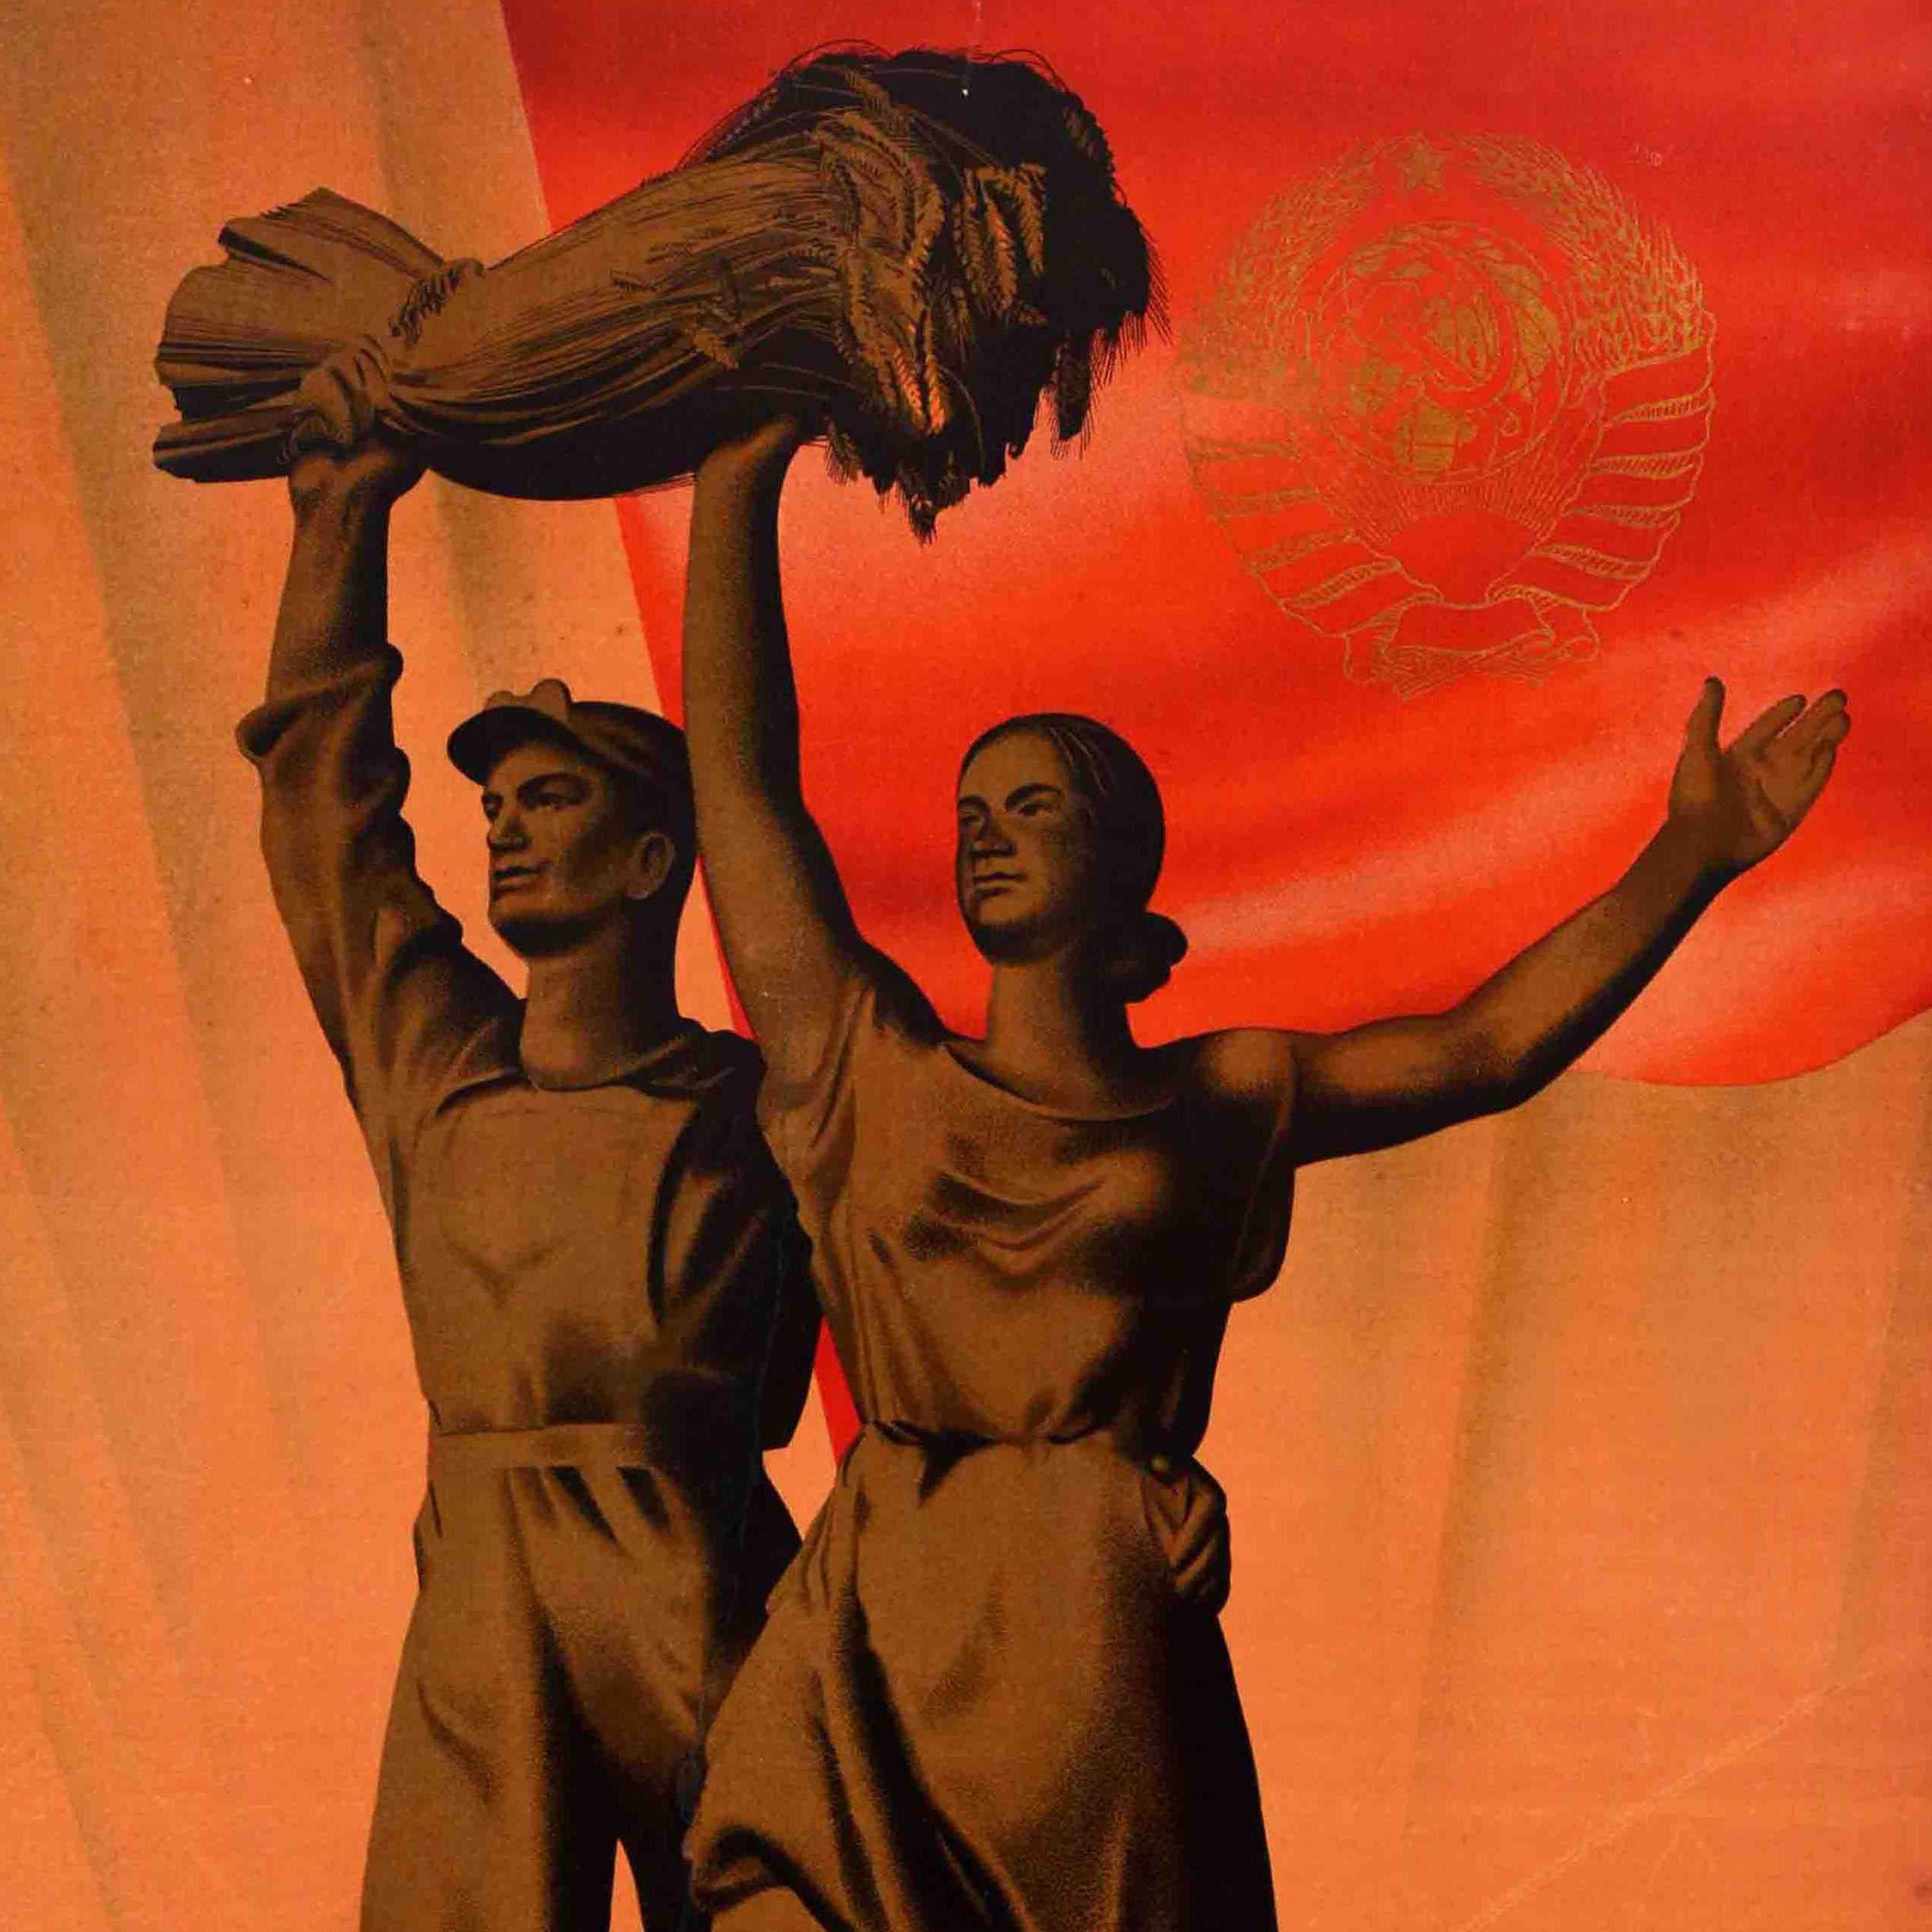 Original vintage poster issued by the Soviet State travel monopoly Intourist in 1939 celebrating the opening of the All-Union Agricultural Exhibition (?????????? ???????-????????????? ???????? / Vsesoyuznaya Selsko-Khozyaystvennaya Vystavka), later